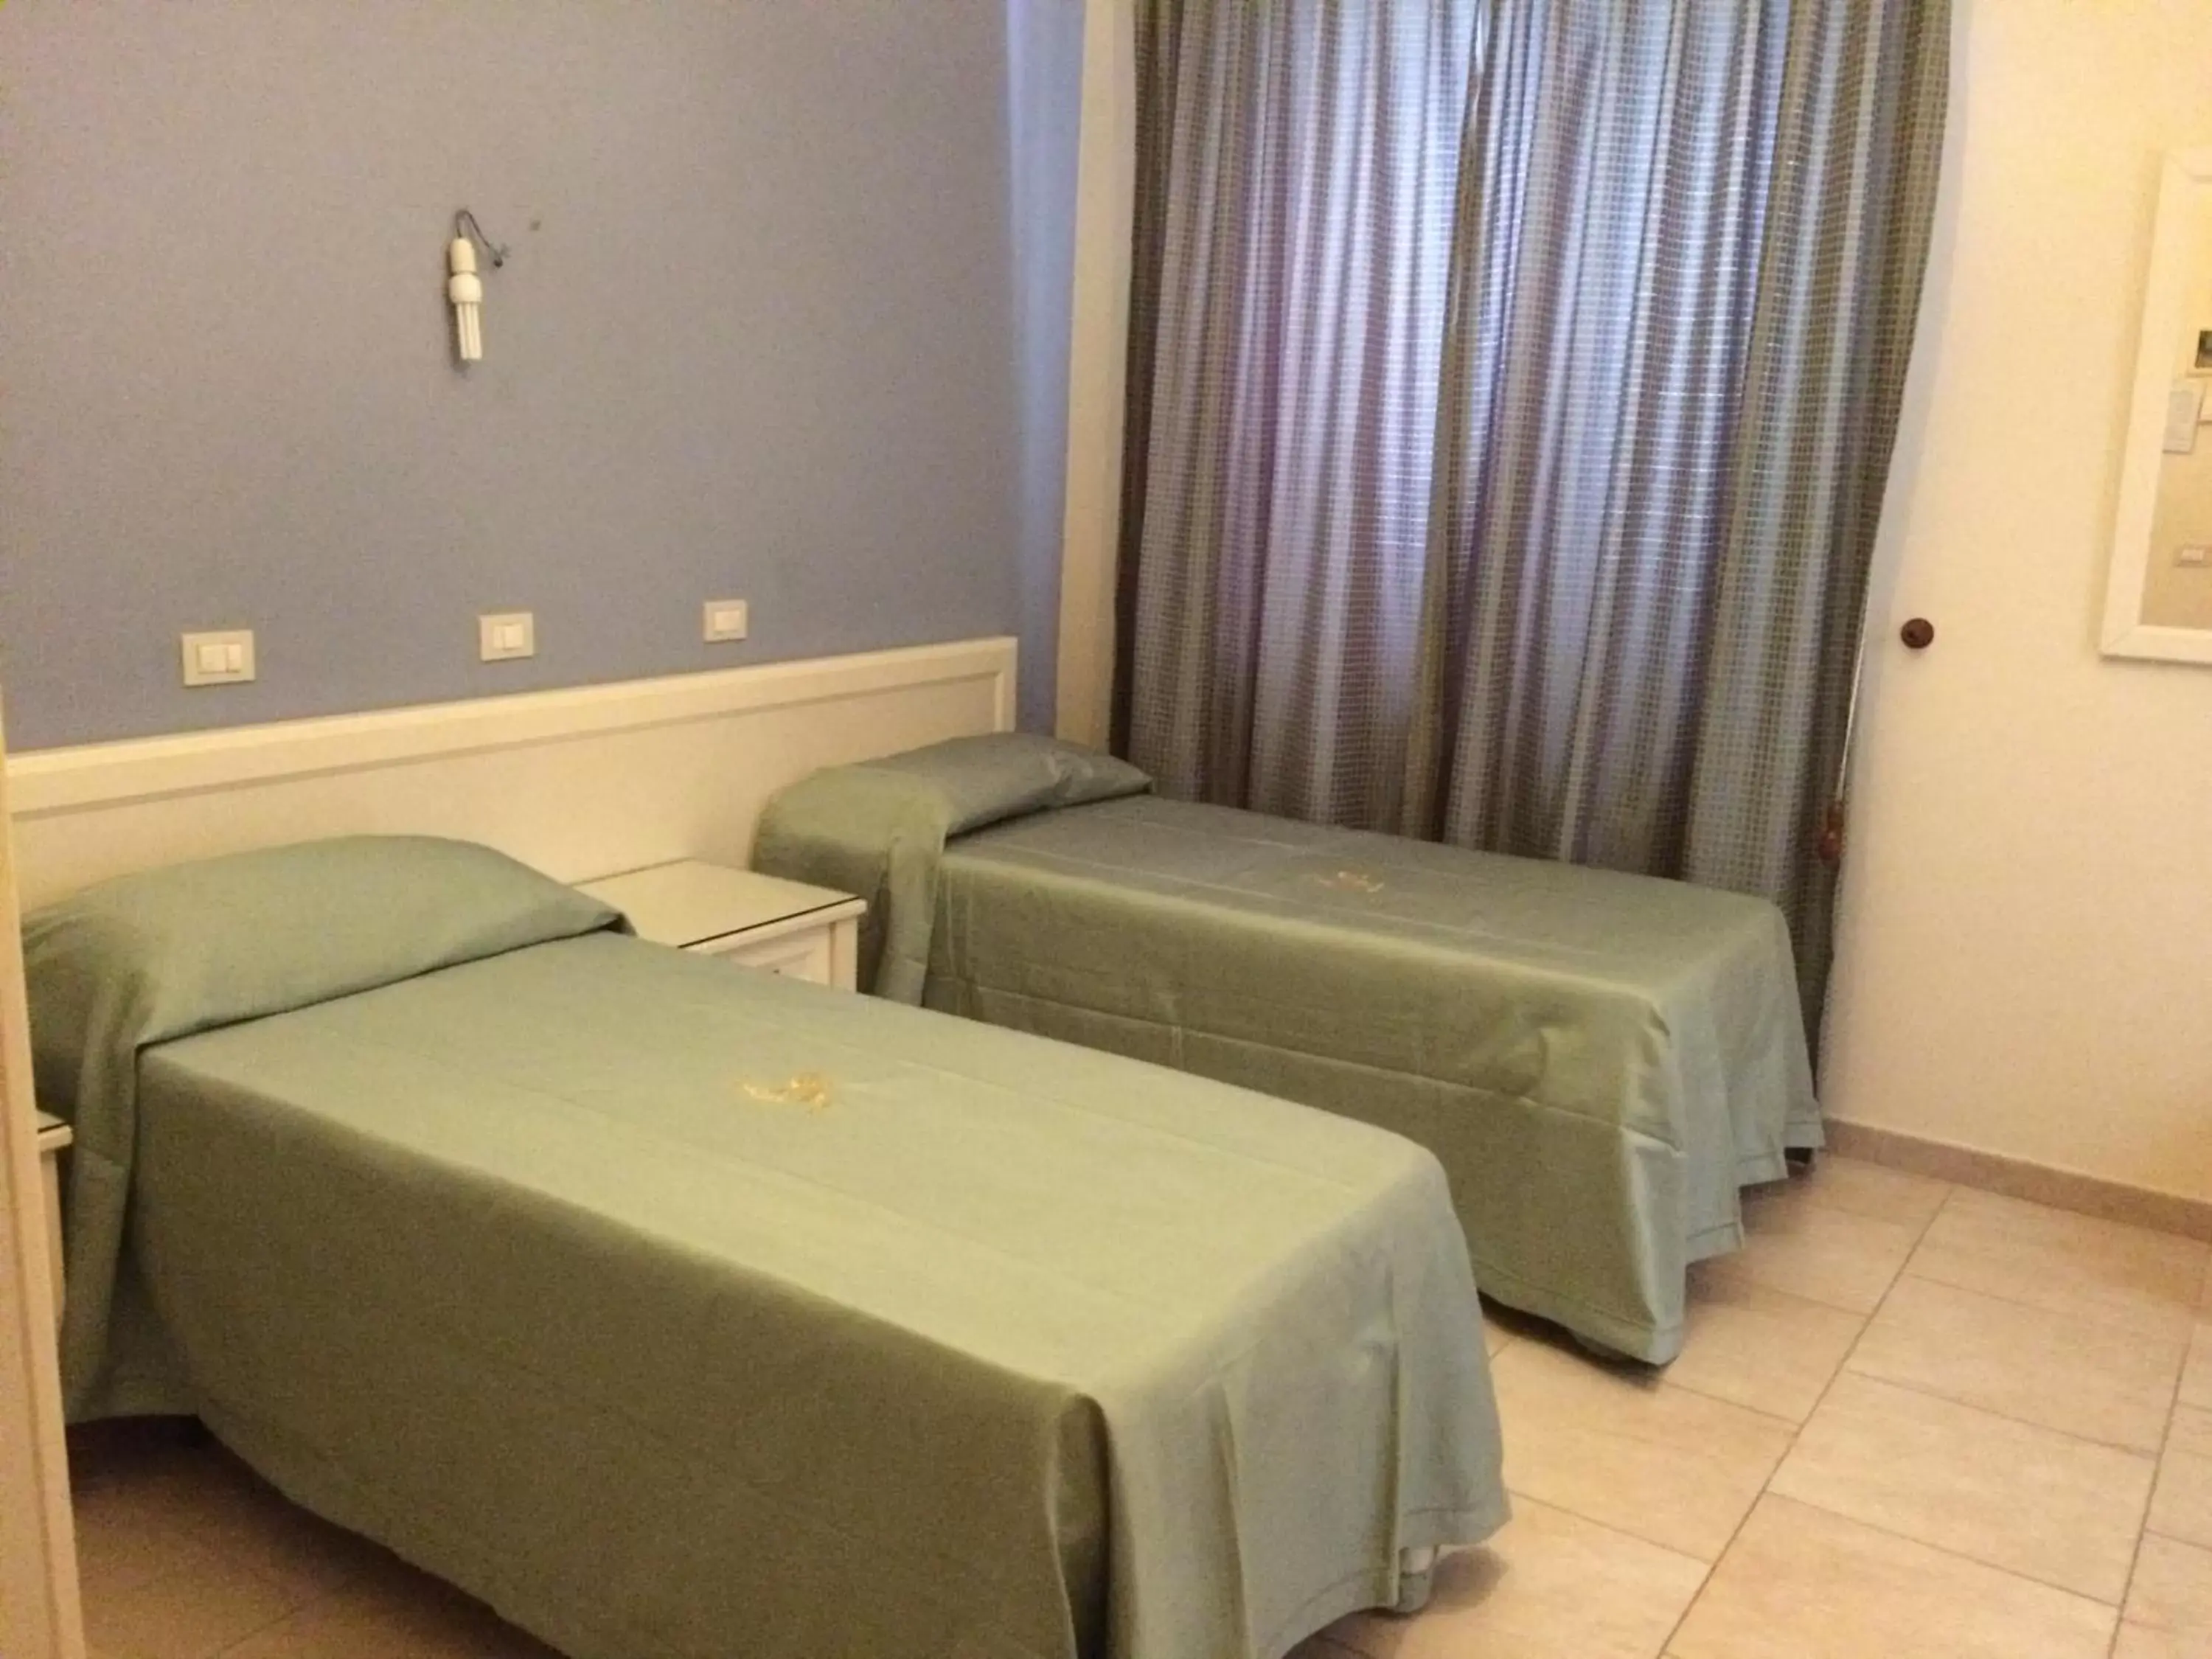 Bed, Room Photo in Hotel Zio Cataldo